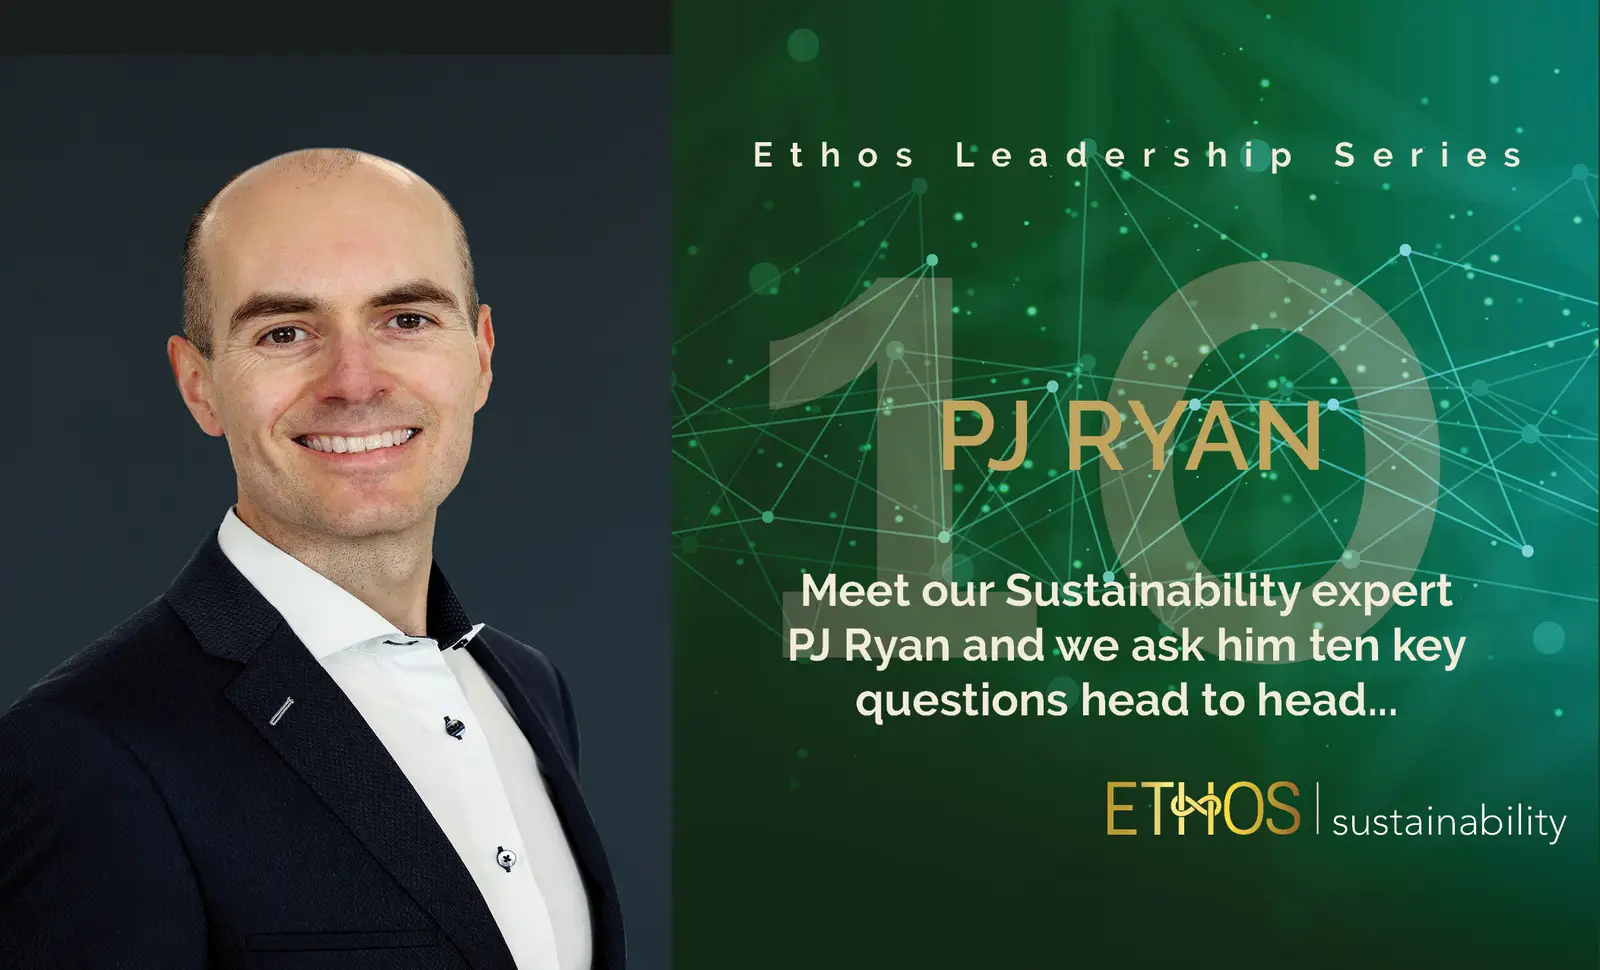 Meet PJ Ryan, Our Sustainability Expert